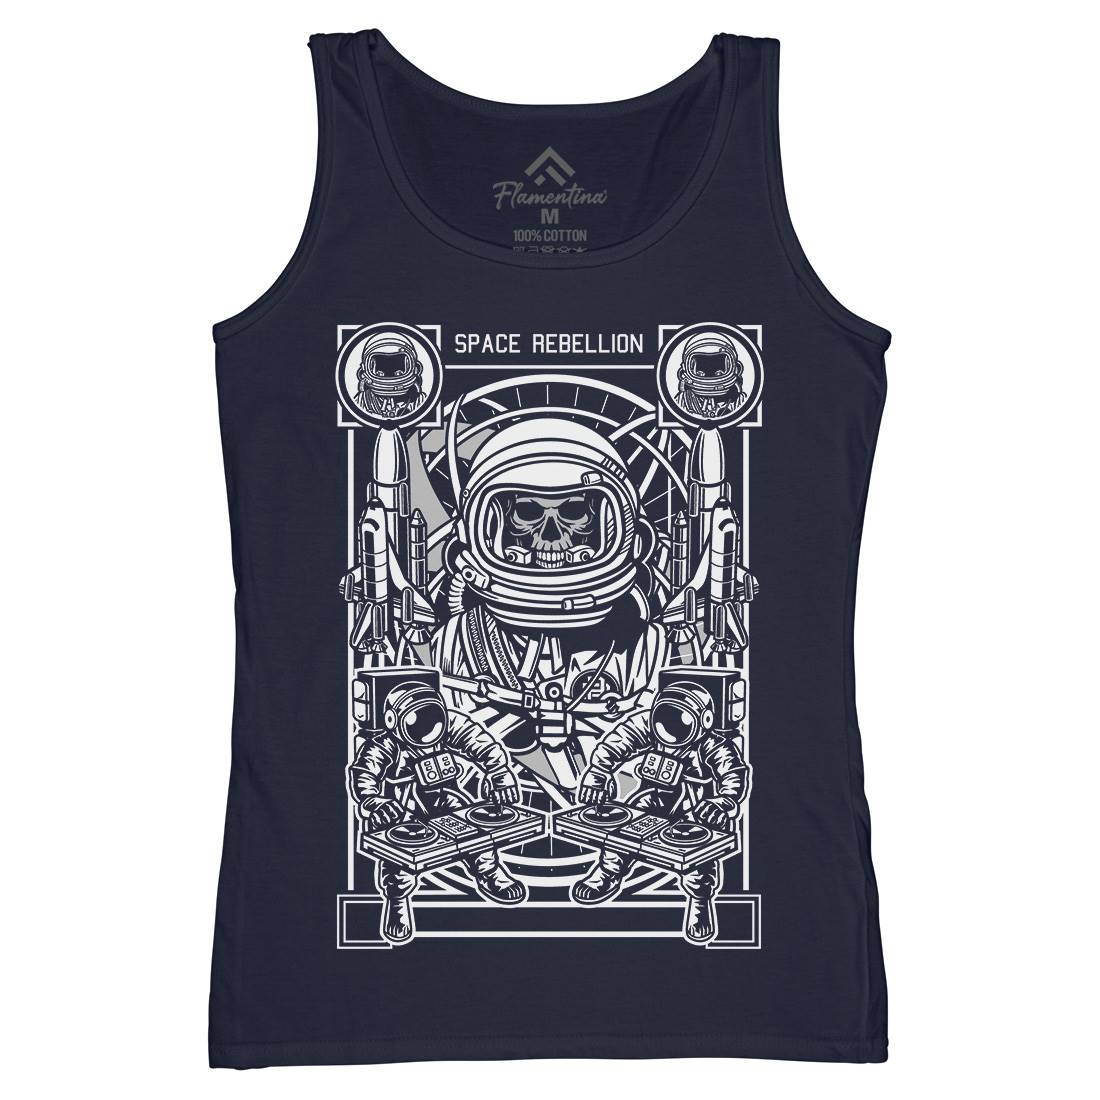 Astronaut Rebellion Womens Organic Tank Top Vest Space D582